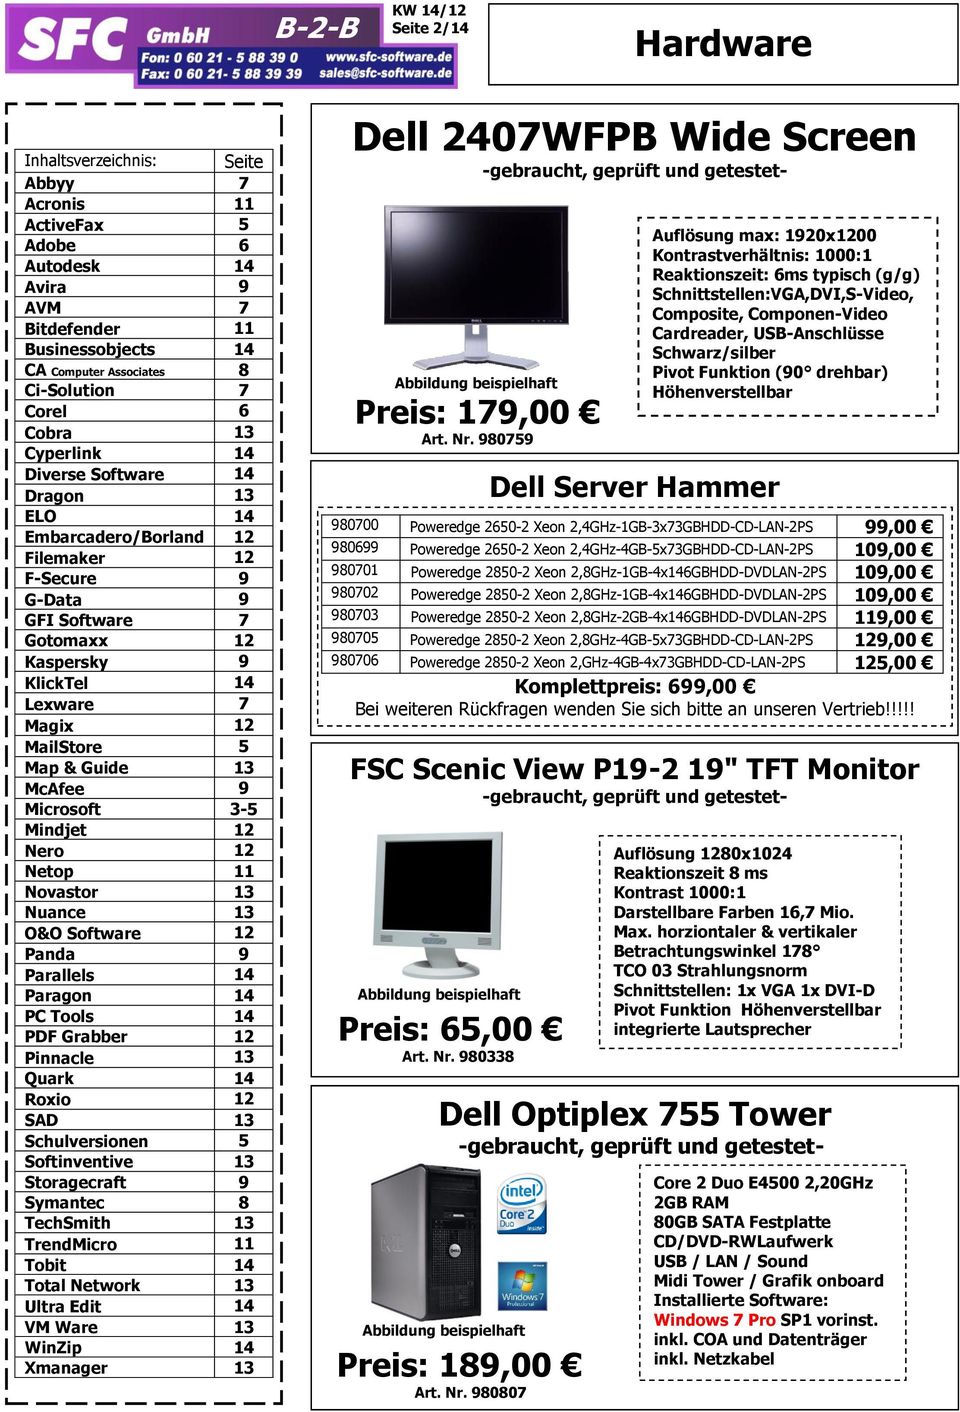 Guide 13 McAfee 9 Microsoft 3-5 Mindjet 12 Nero 12 Netop 11 Novastor 13 Nuance 13 O&O Software 12 Panda 9 Parallels 14 Paragon 14 PC Tools 14 PDF Grabber 12 Pinnacle 13 Quark 14 Roxio 12 SAD 13